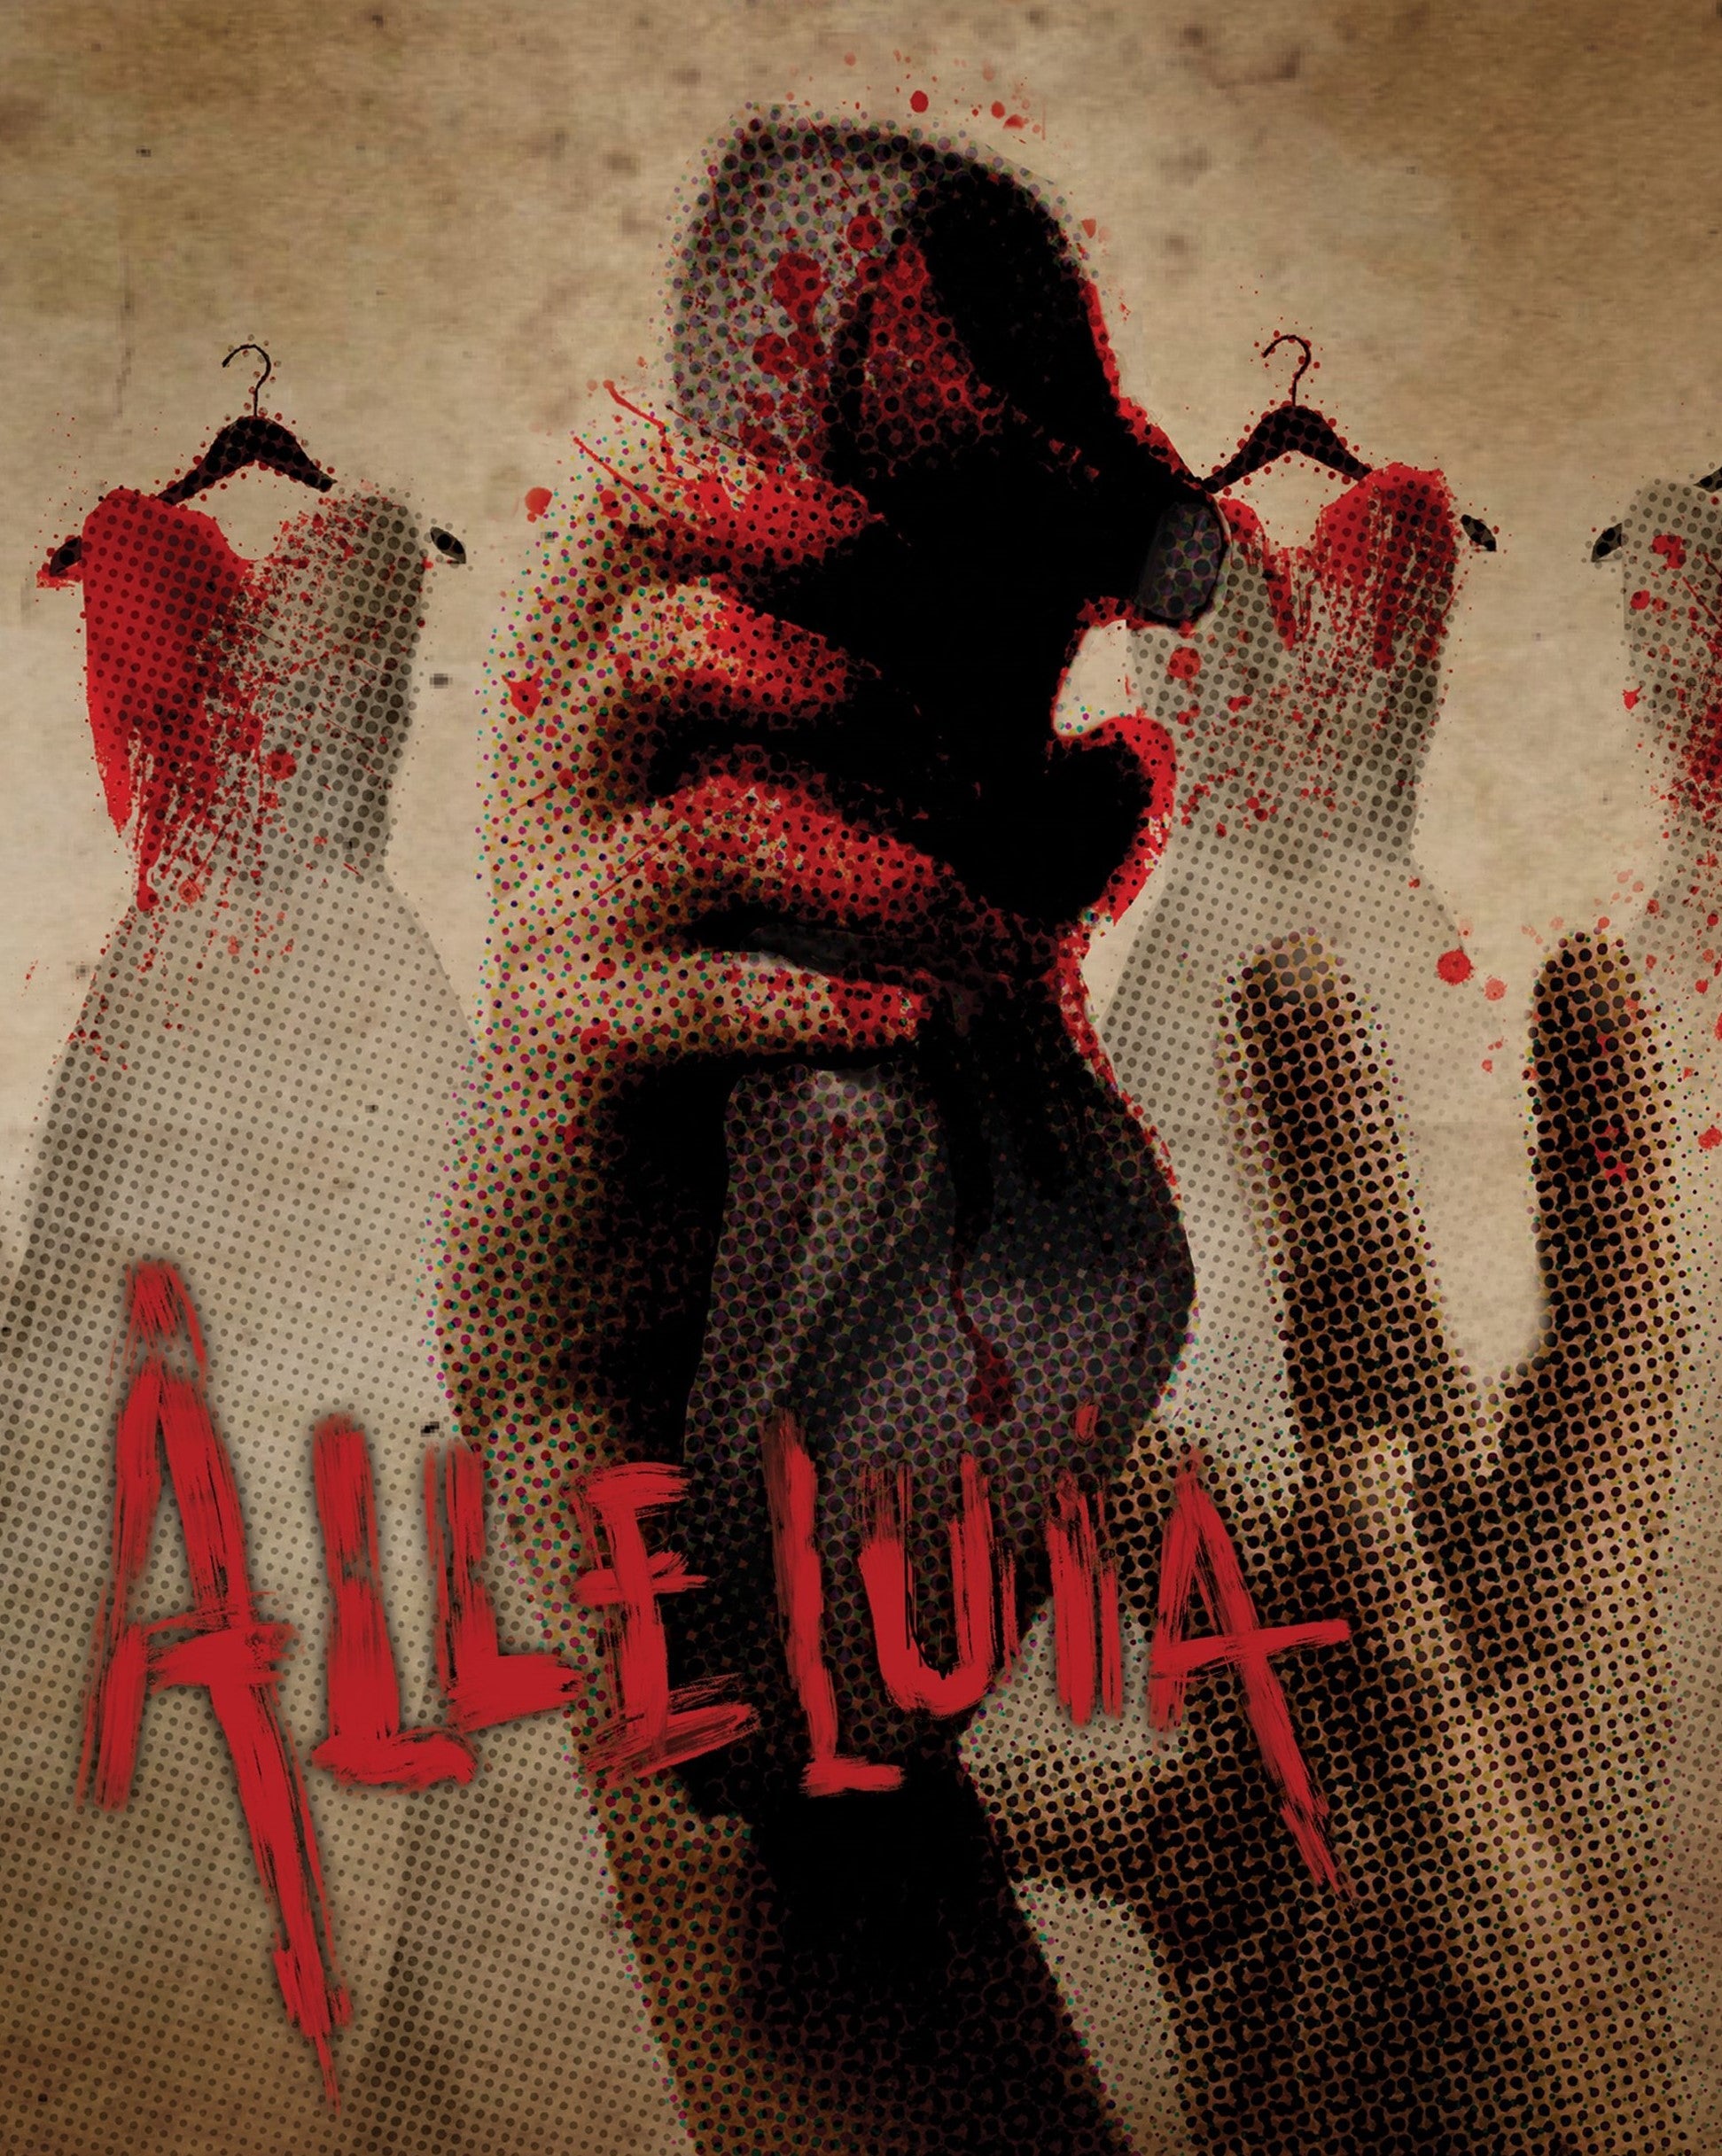 Alleluia (Limited Edition) Blu-Ray Blu-Ray